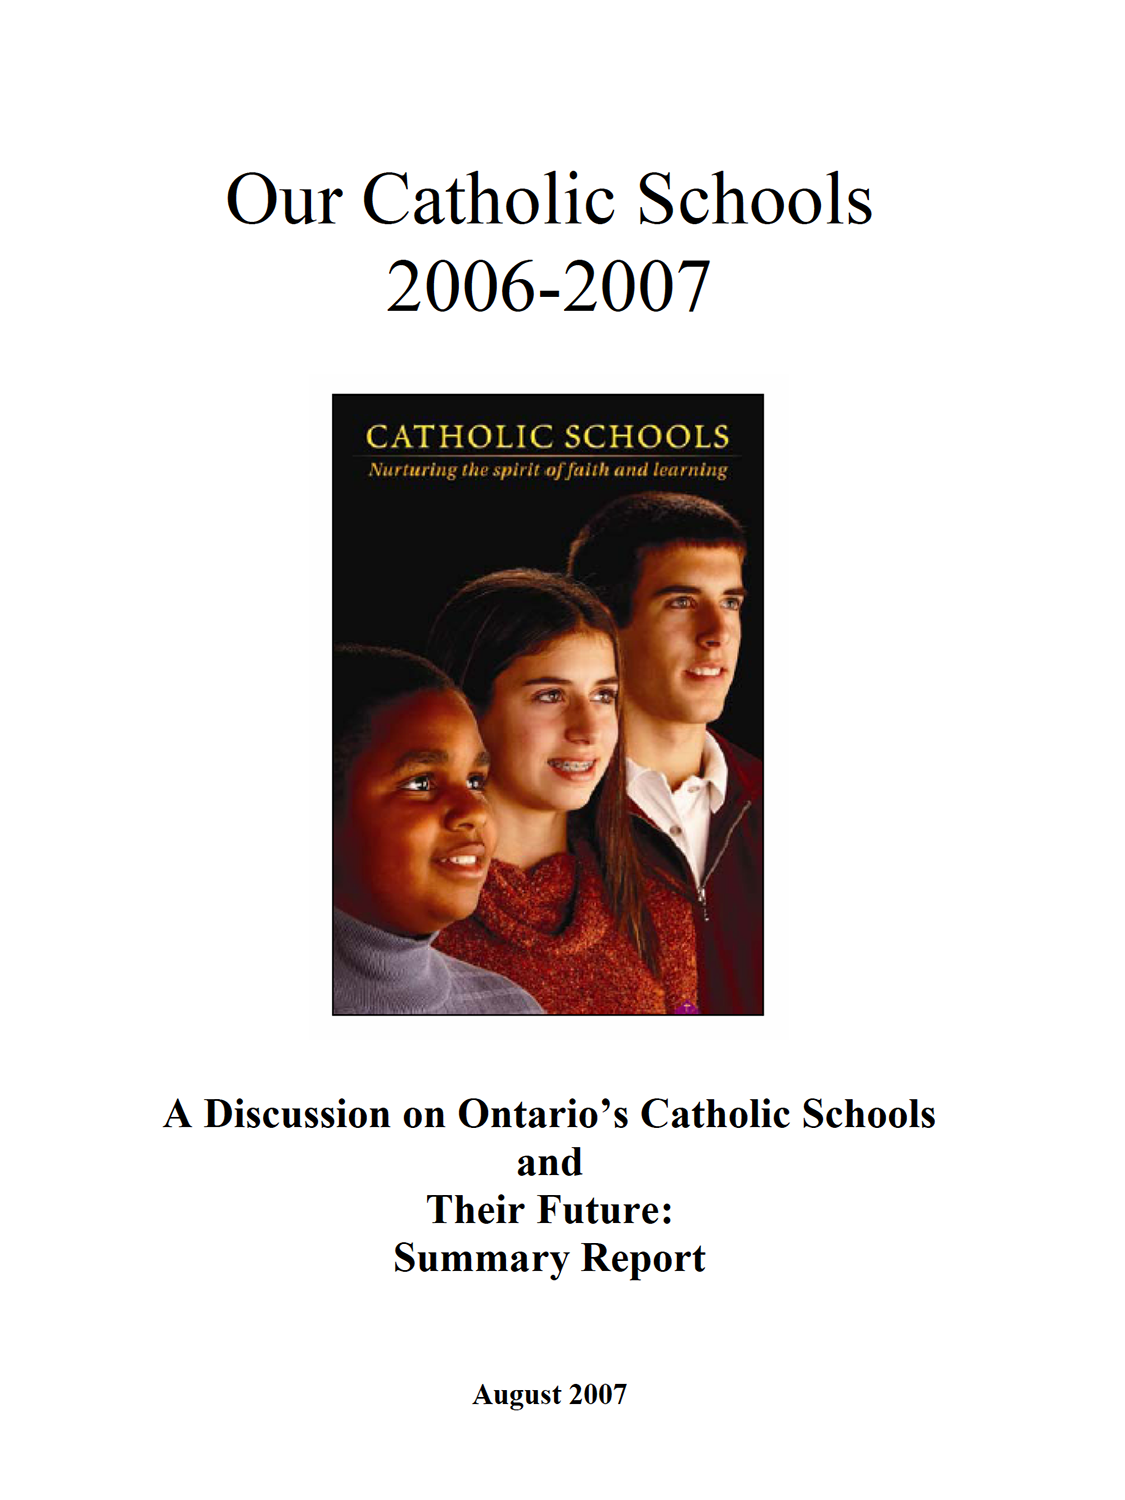 Our Catholic Schools 2006-2007